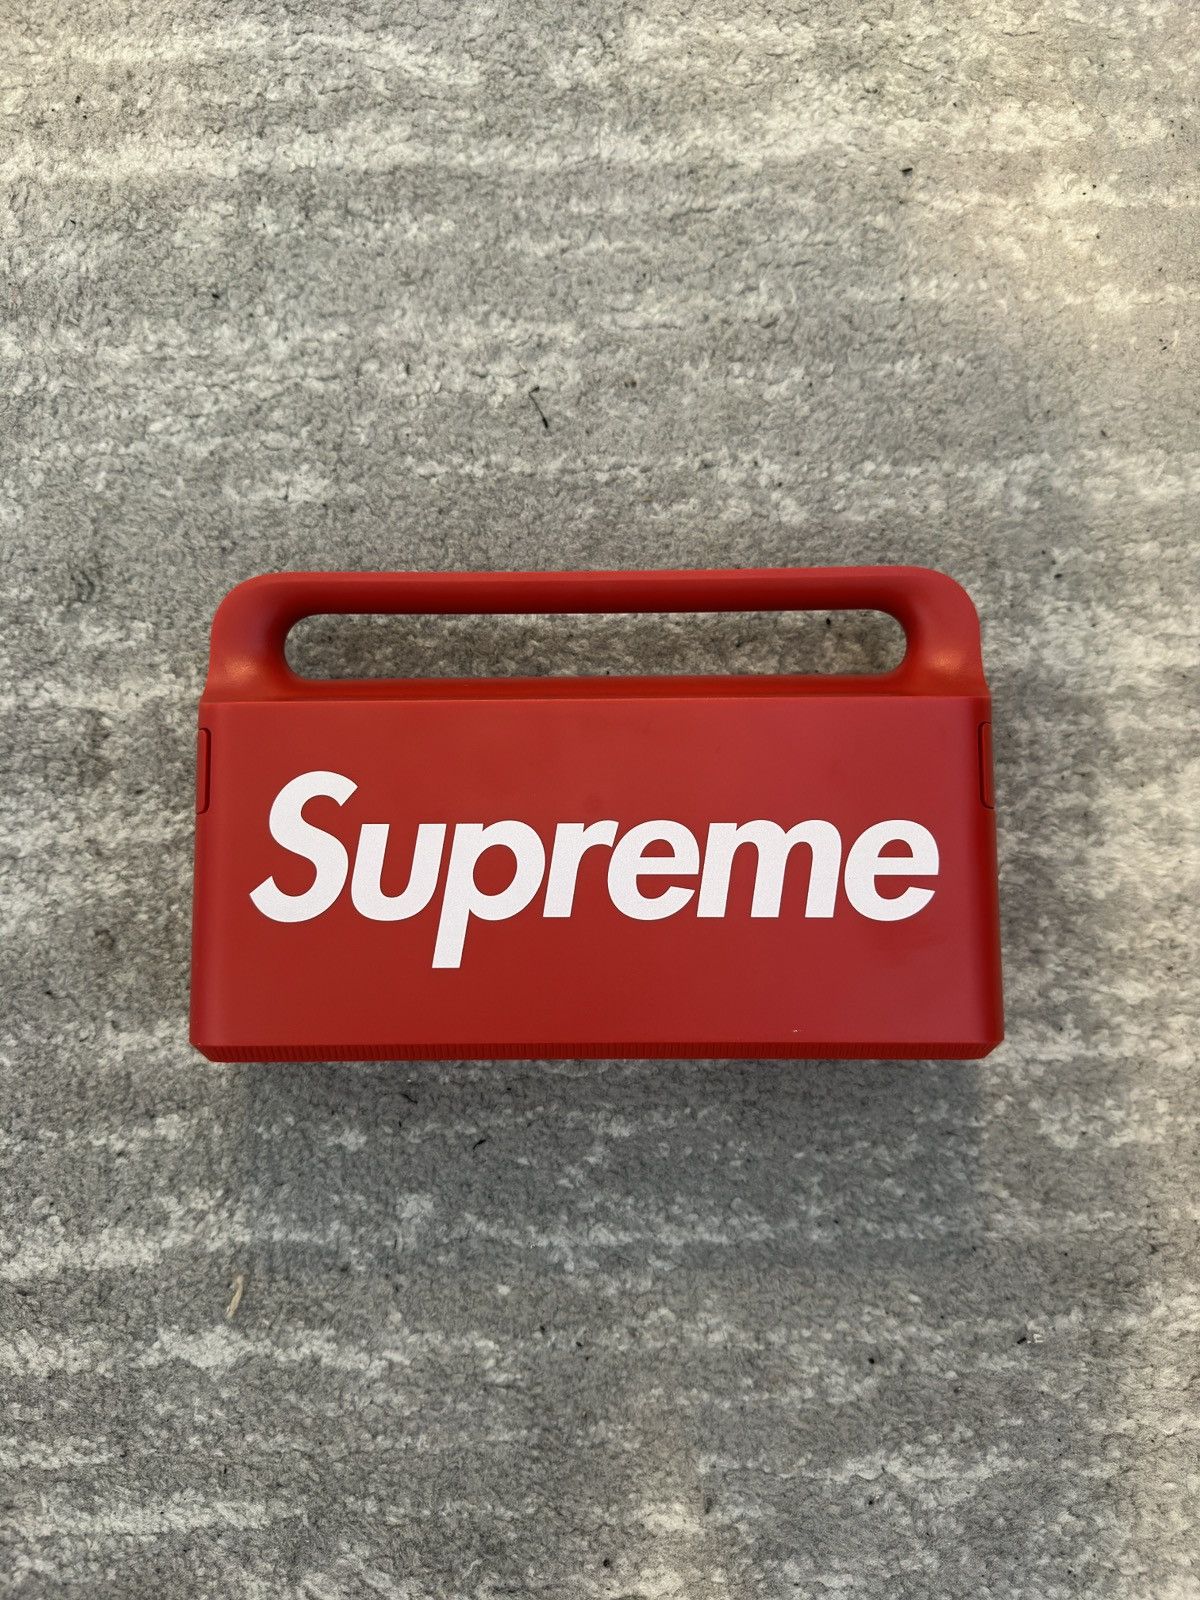 Supreme Supreme Hoto 5-Piece Tool Set | Grailed